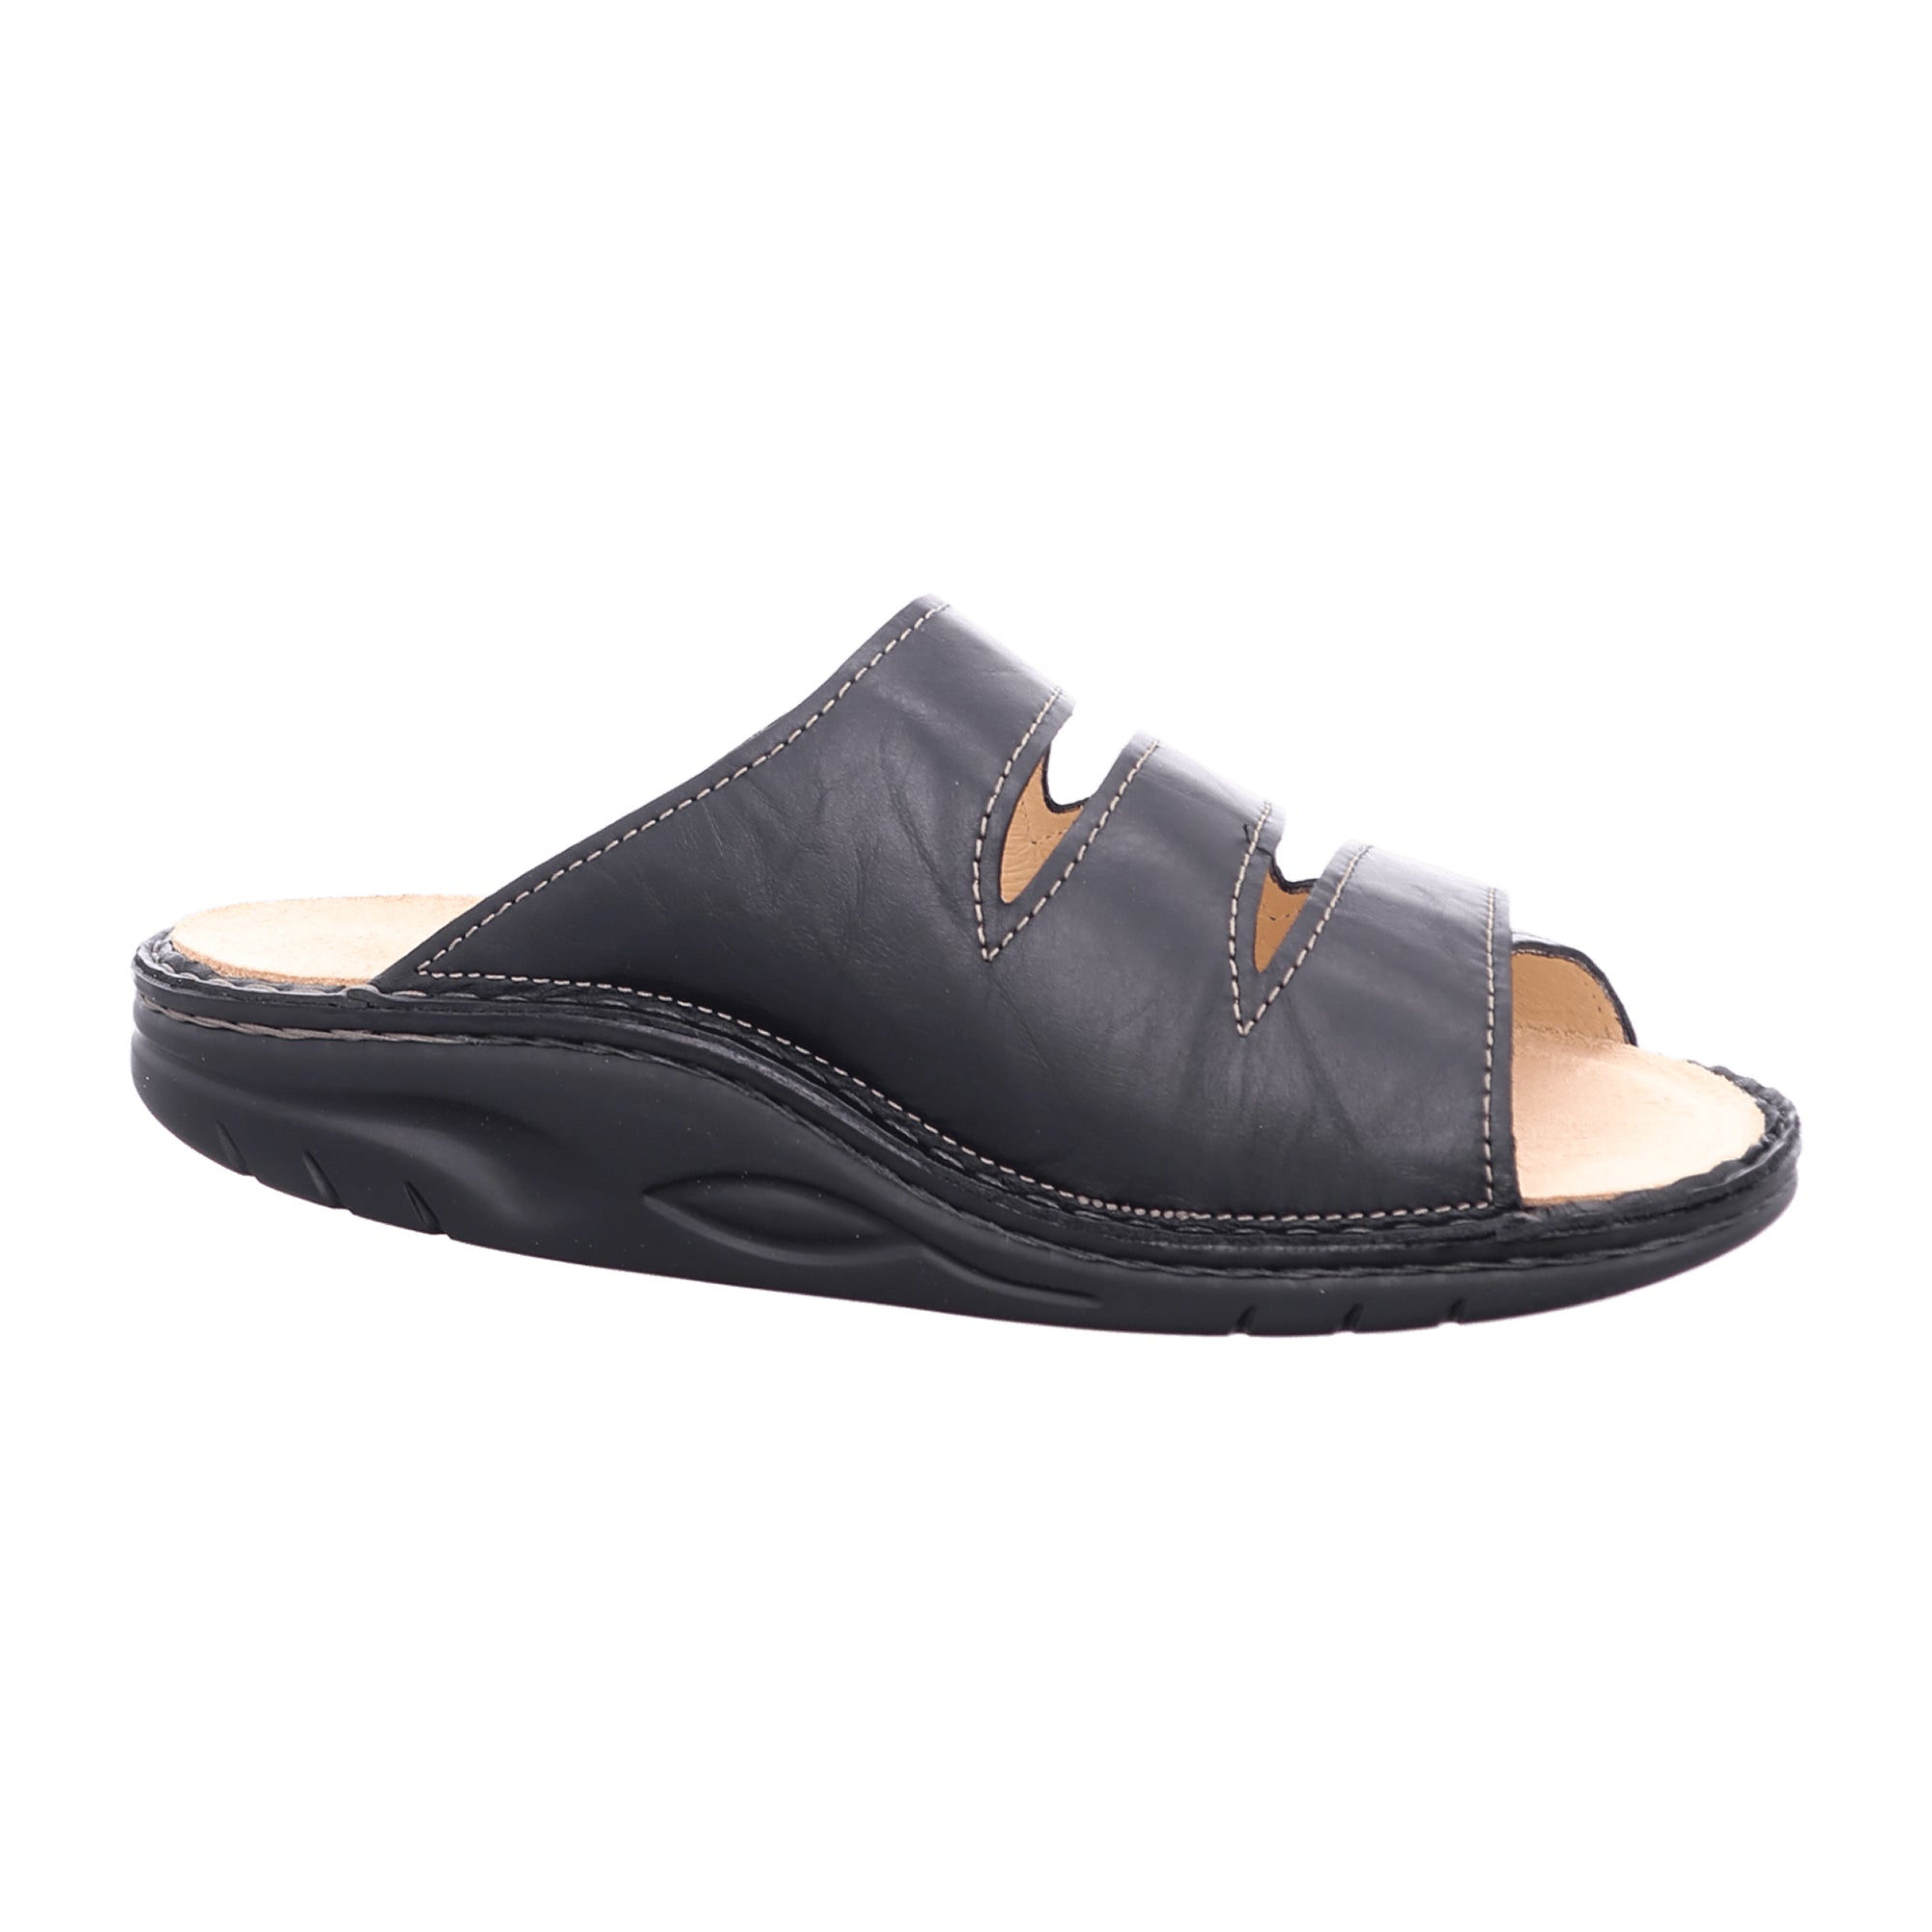 Finn Comfort Andros Women's Comfort Sandals, Black – Stylish & Durable